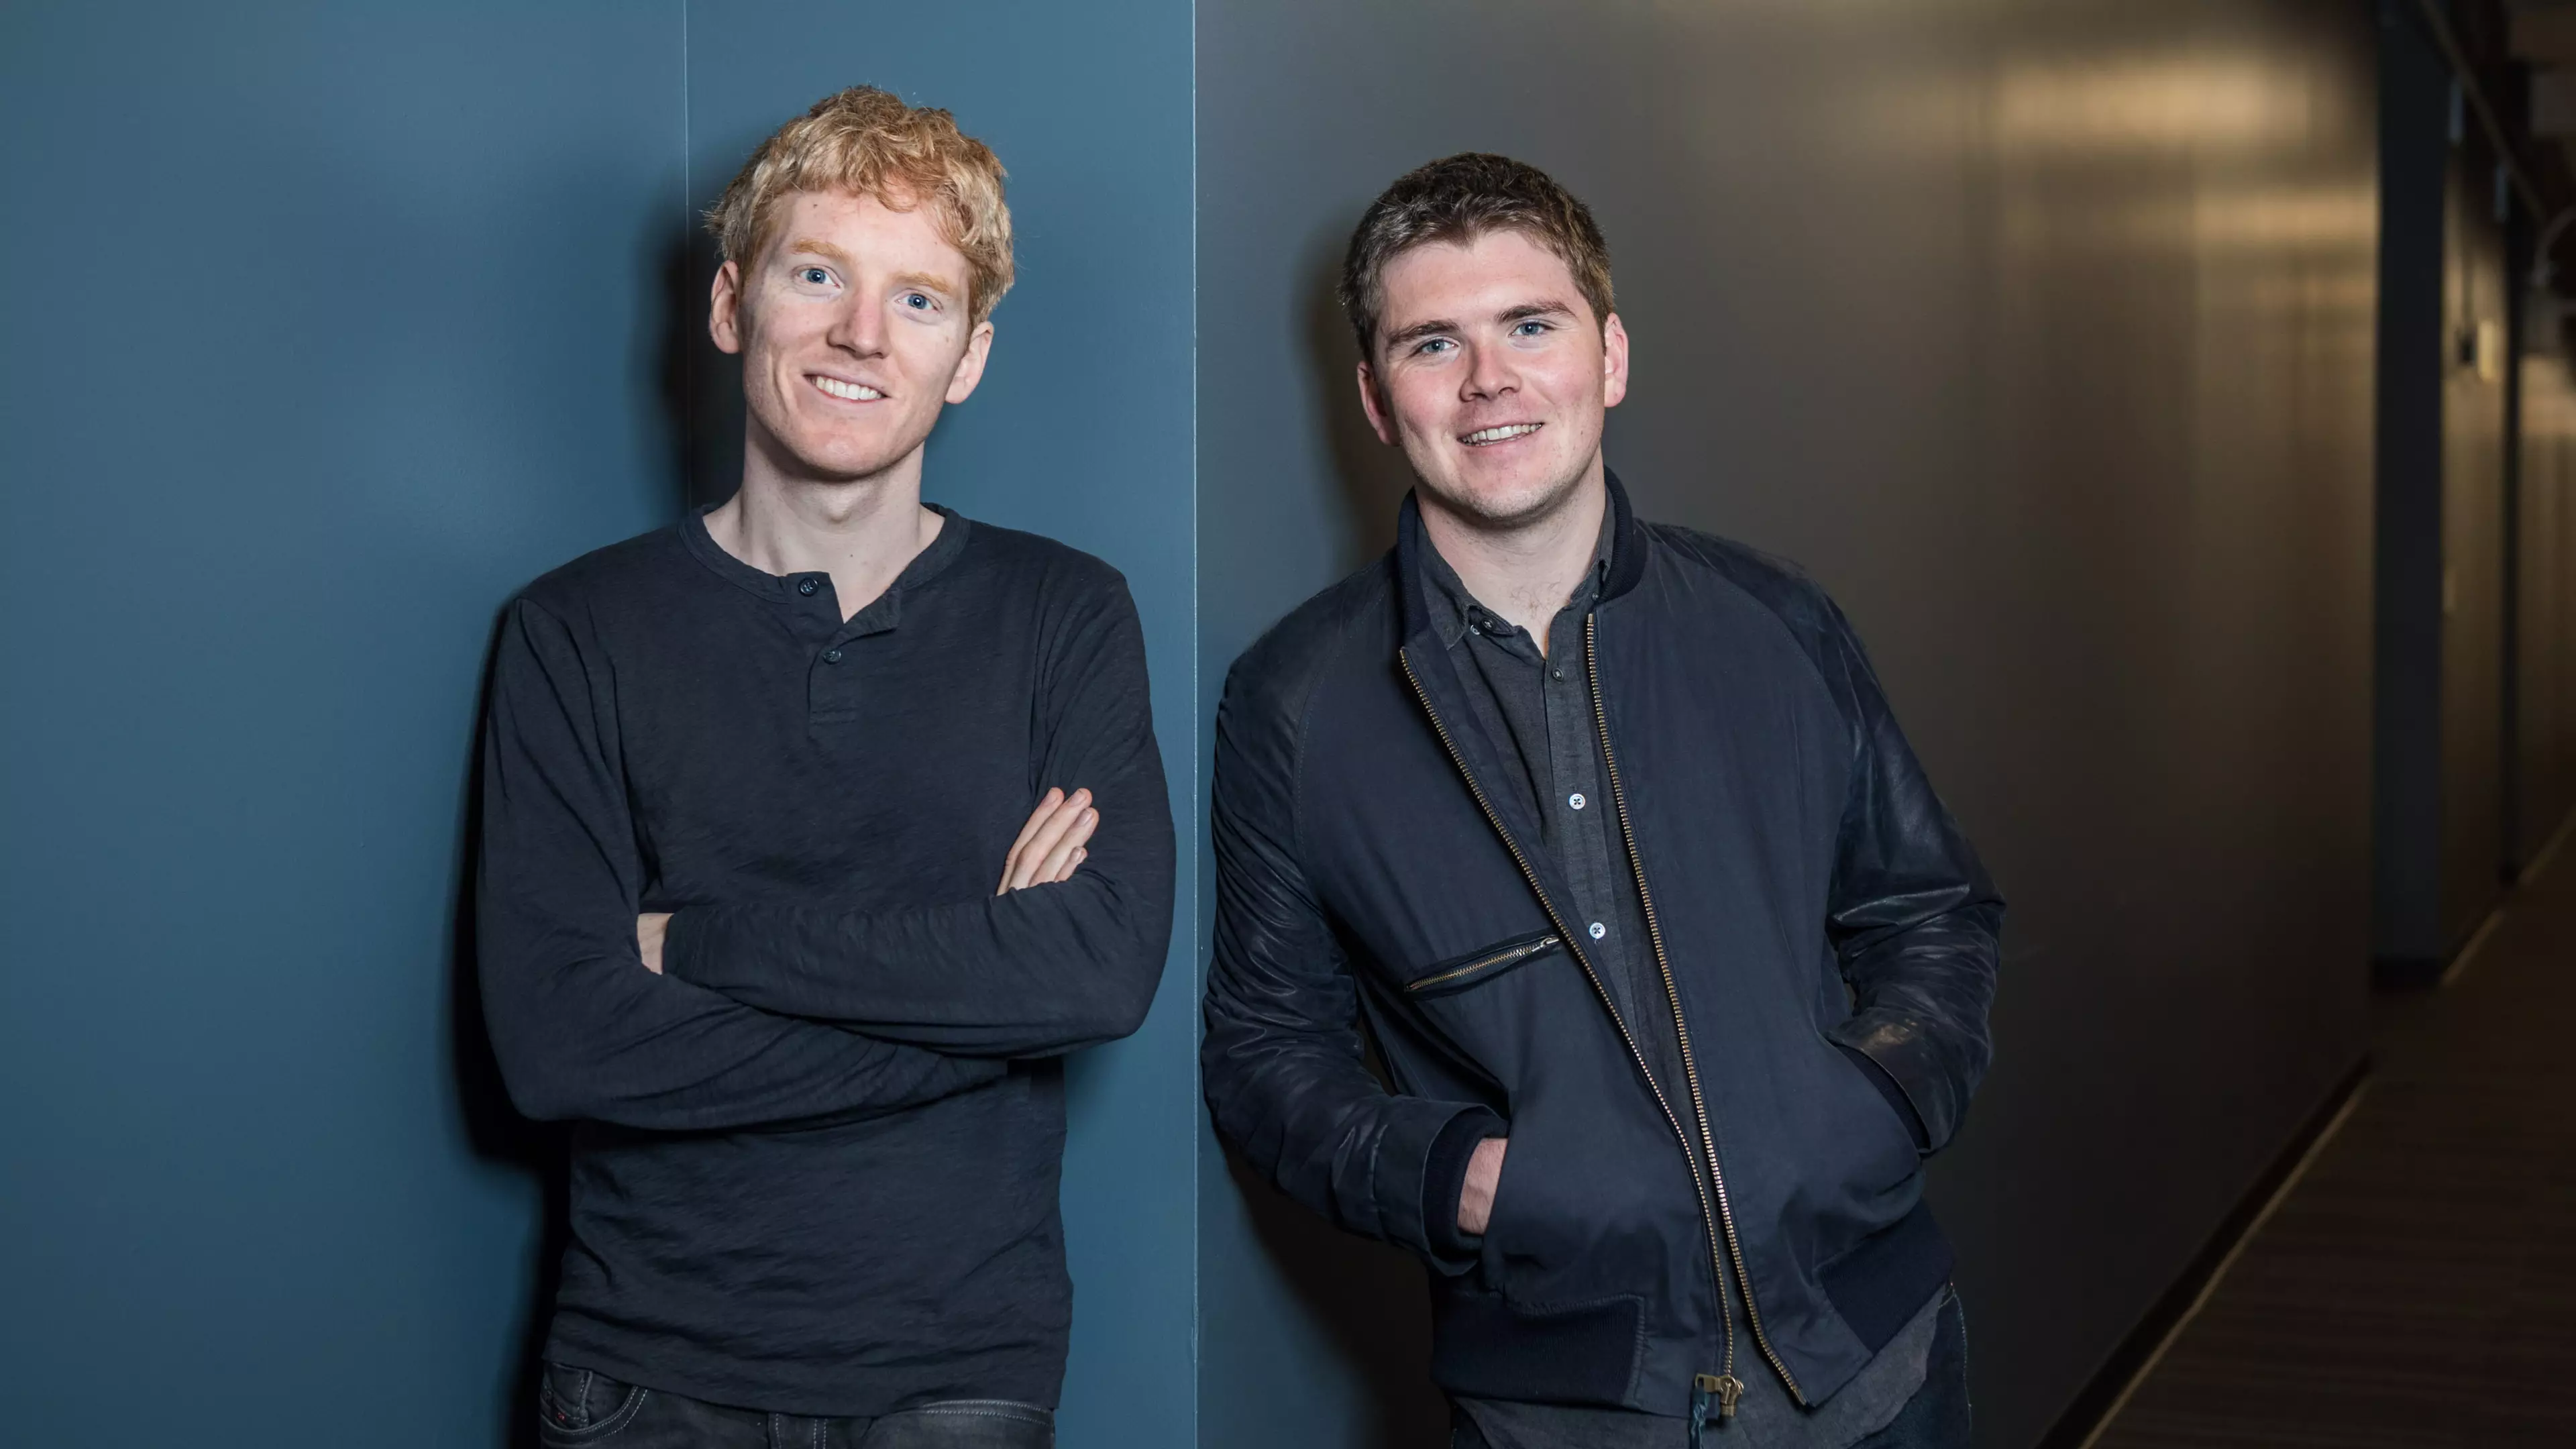 Irish Brothers, 30 and 32, Now Own Company Worth £70 Billion